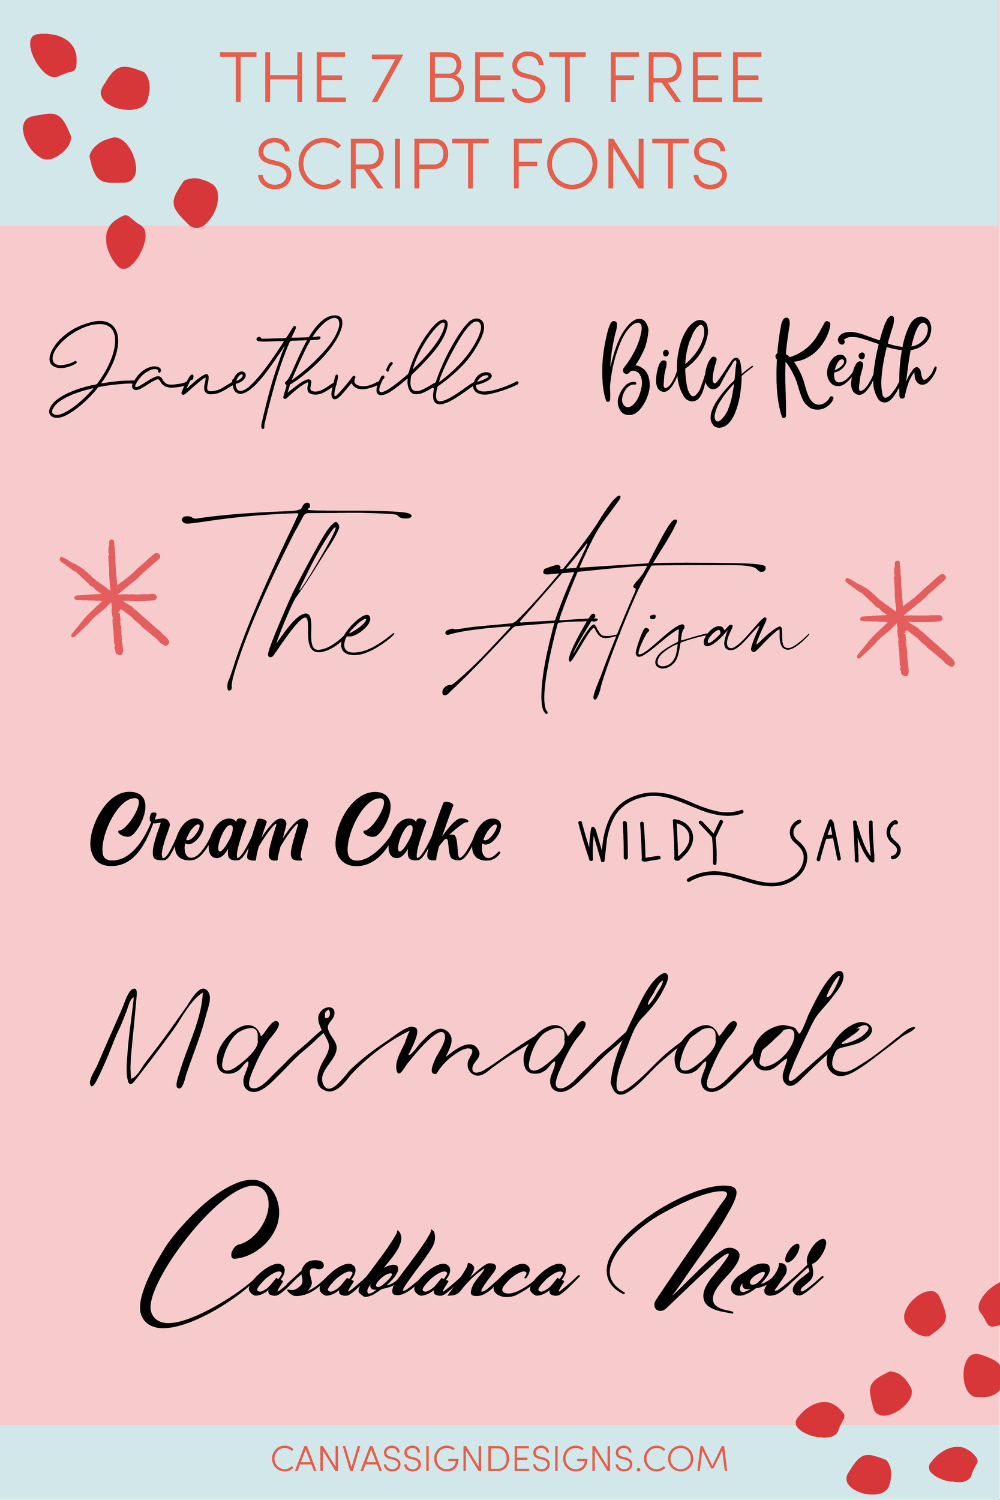 The Best Free Script Fonts - Canvas Sign Designs Blog